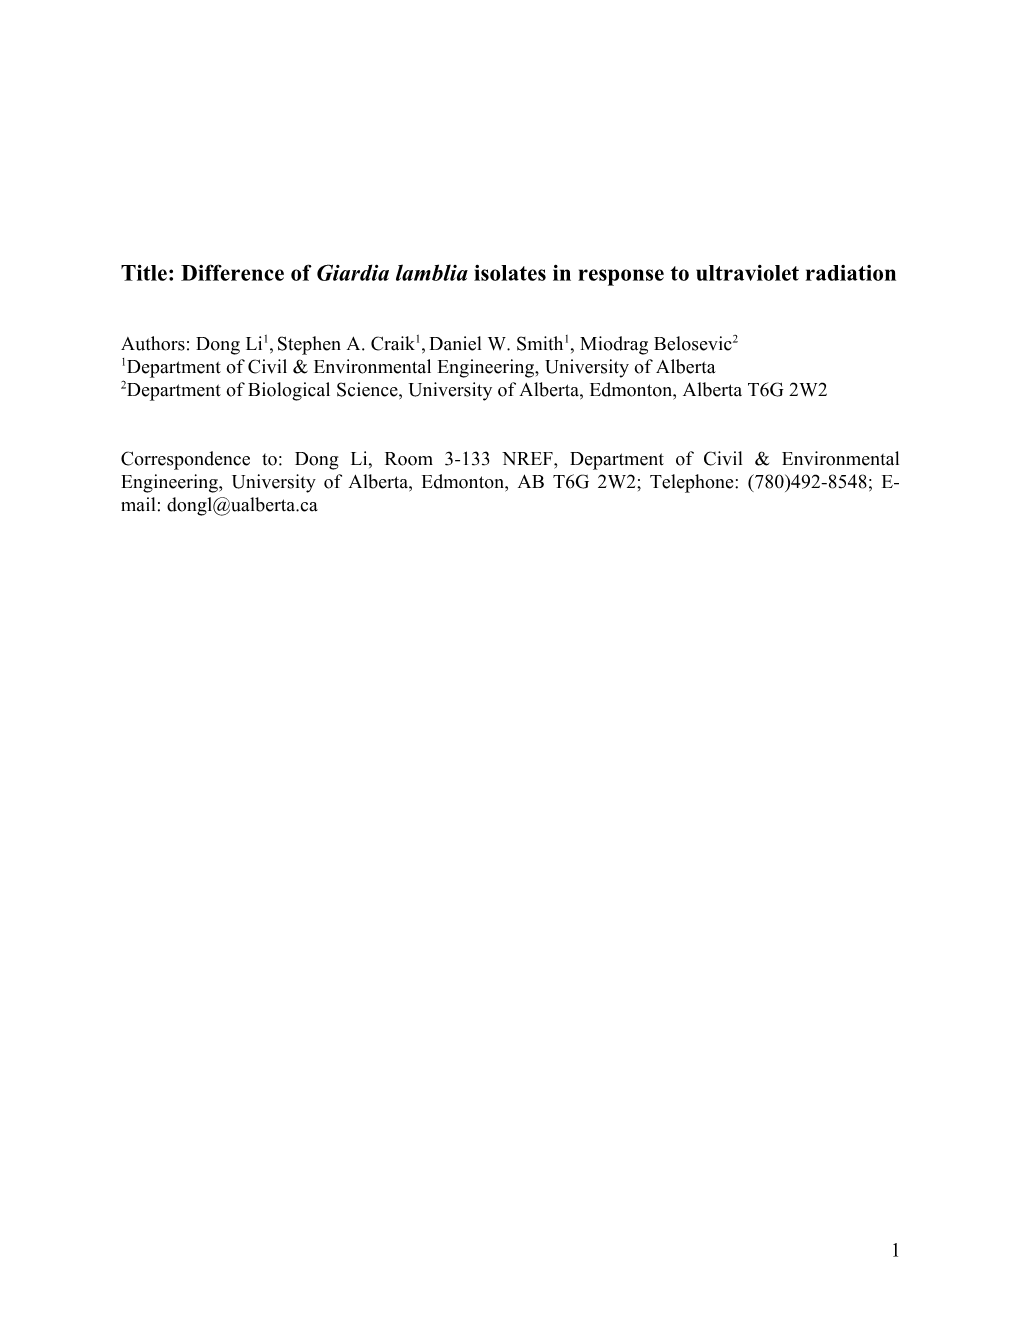 Giardia Lamblia Strain Difference Response to Ultraviolet Exposure